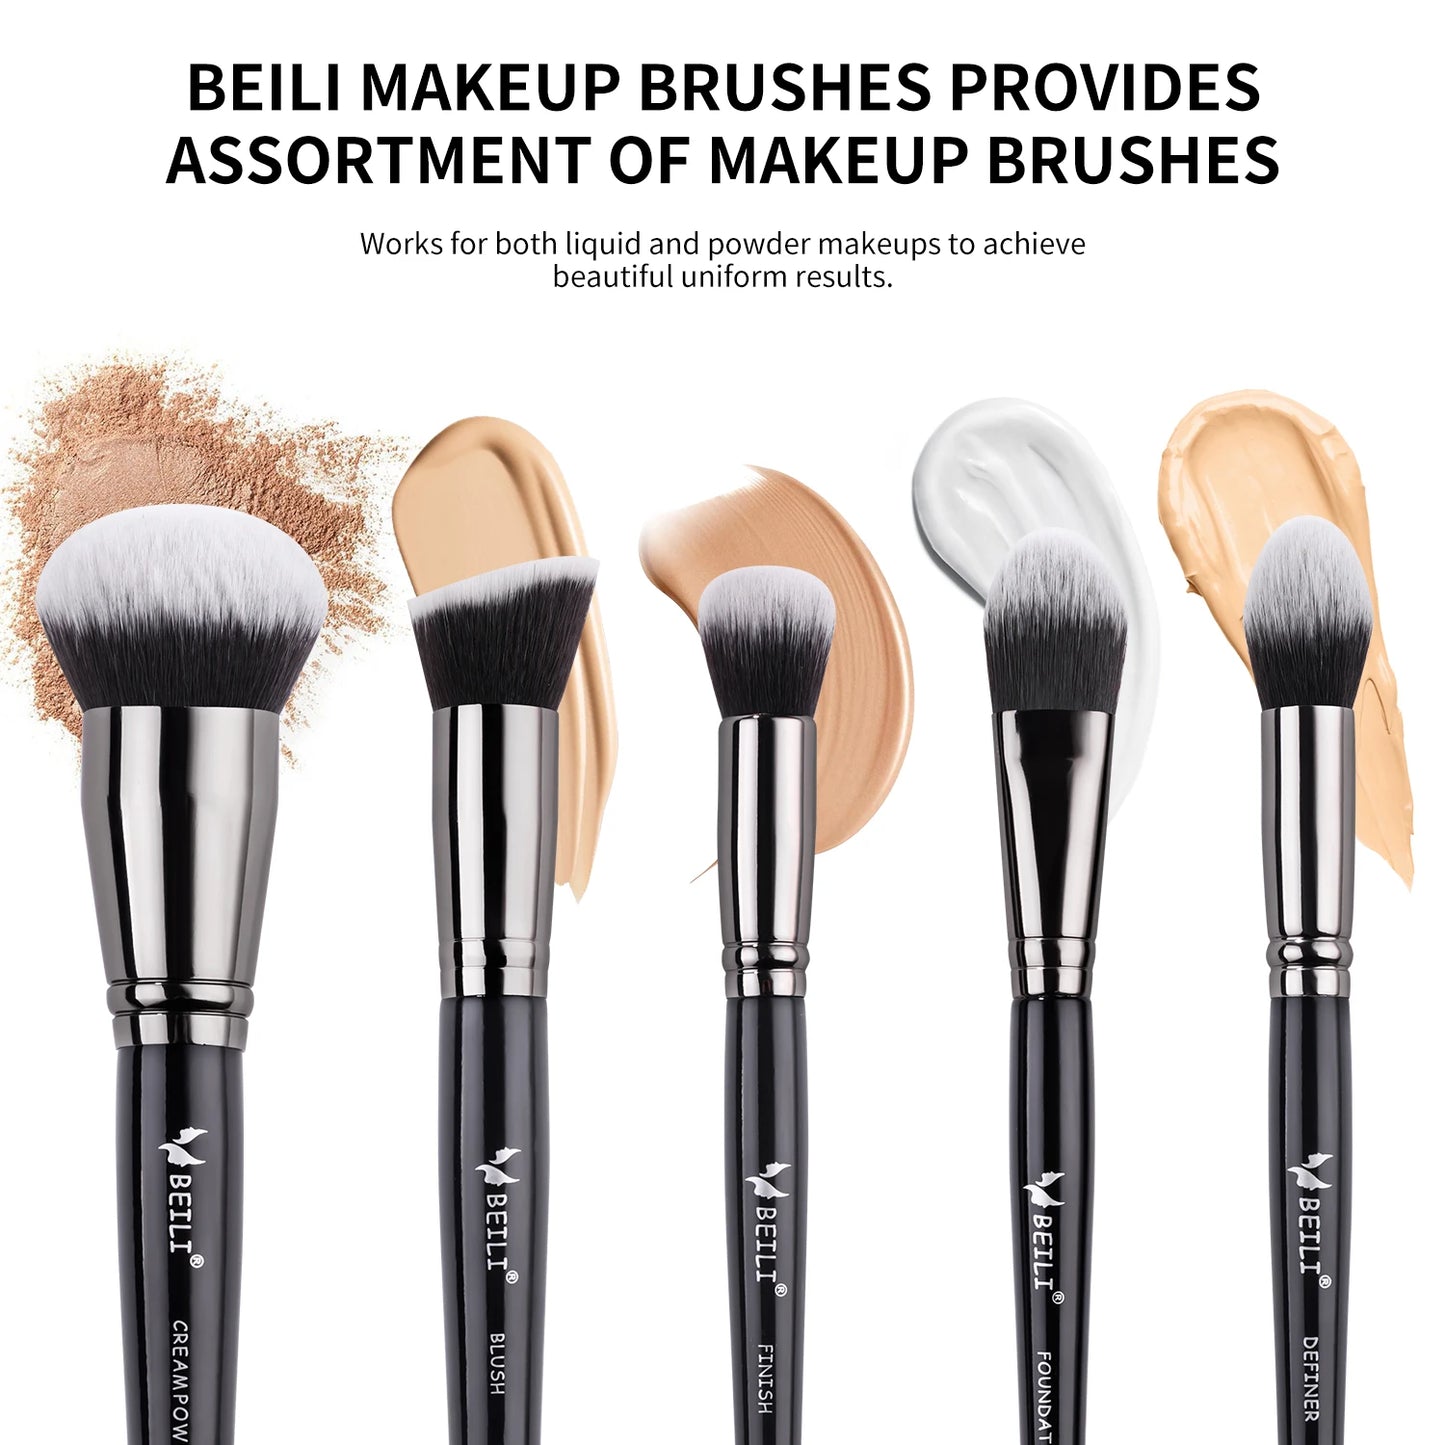 BEILI Brushes 25pcs Makeup Brush Set Cosmetic Foundation Brush Kit Eyeshadow Powder Blush Concealer Make Up Tool